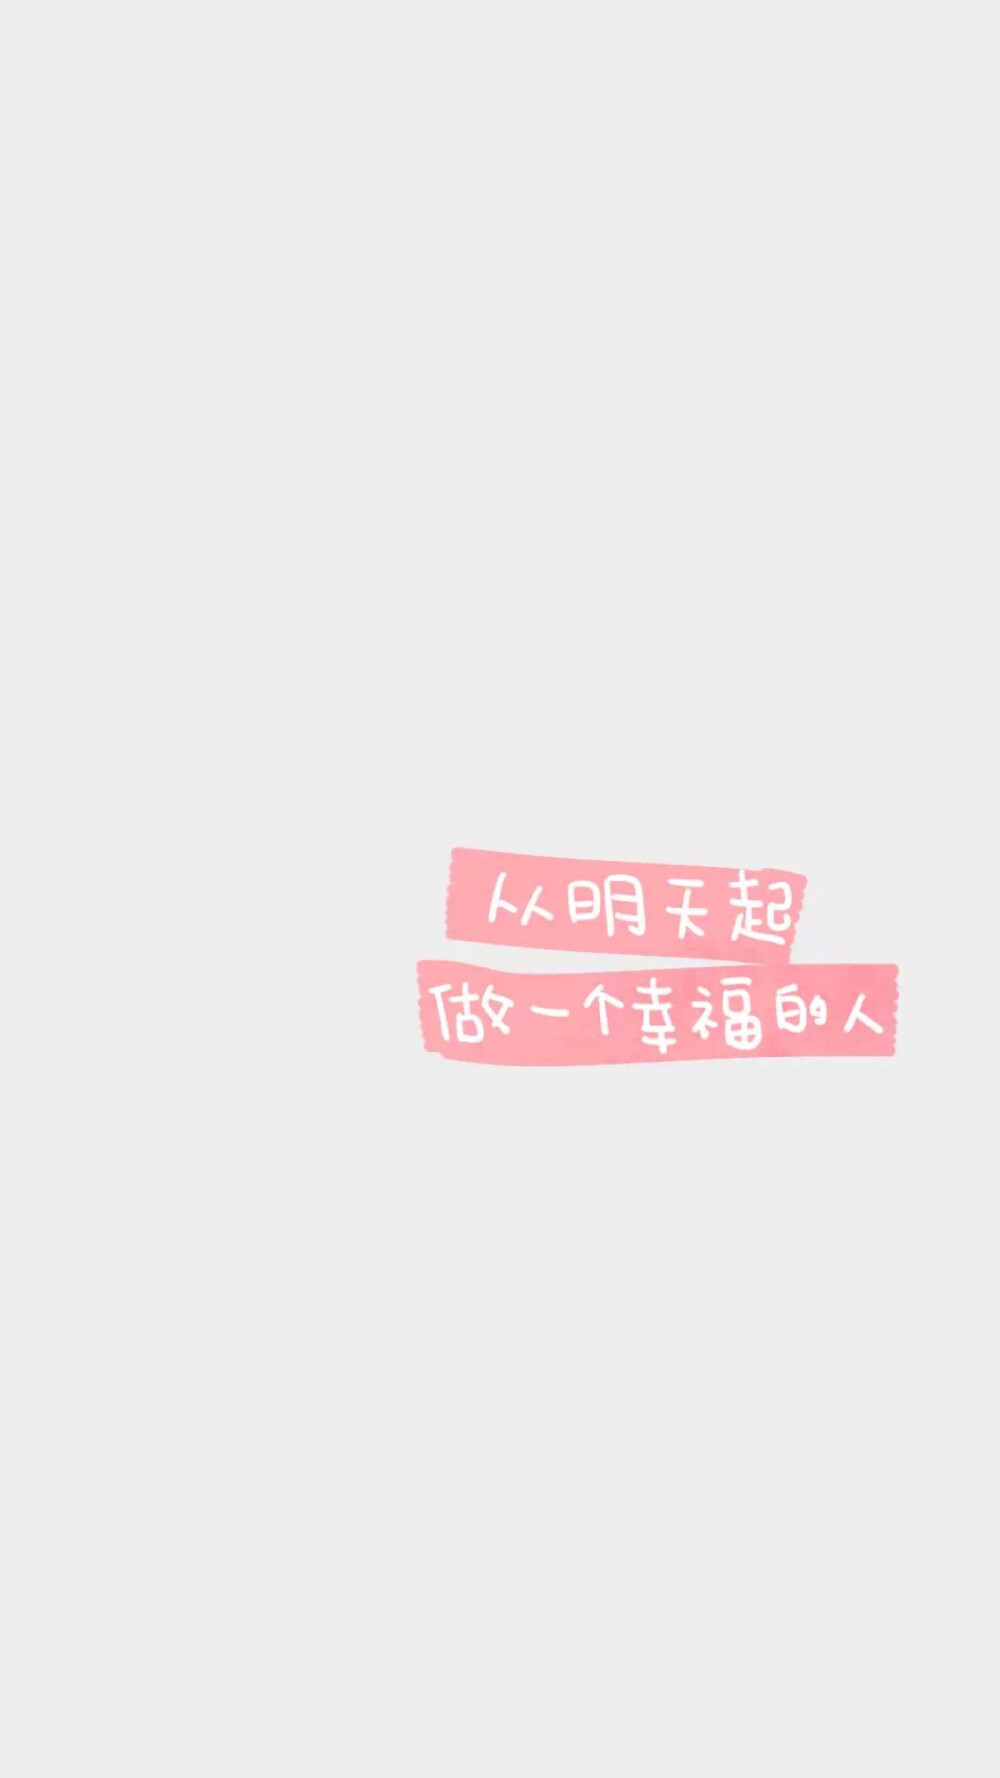  from晚安荼蘼 手写句子 文字壁纸 锁屏